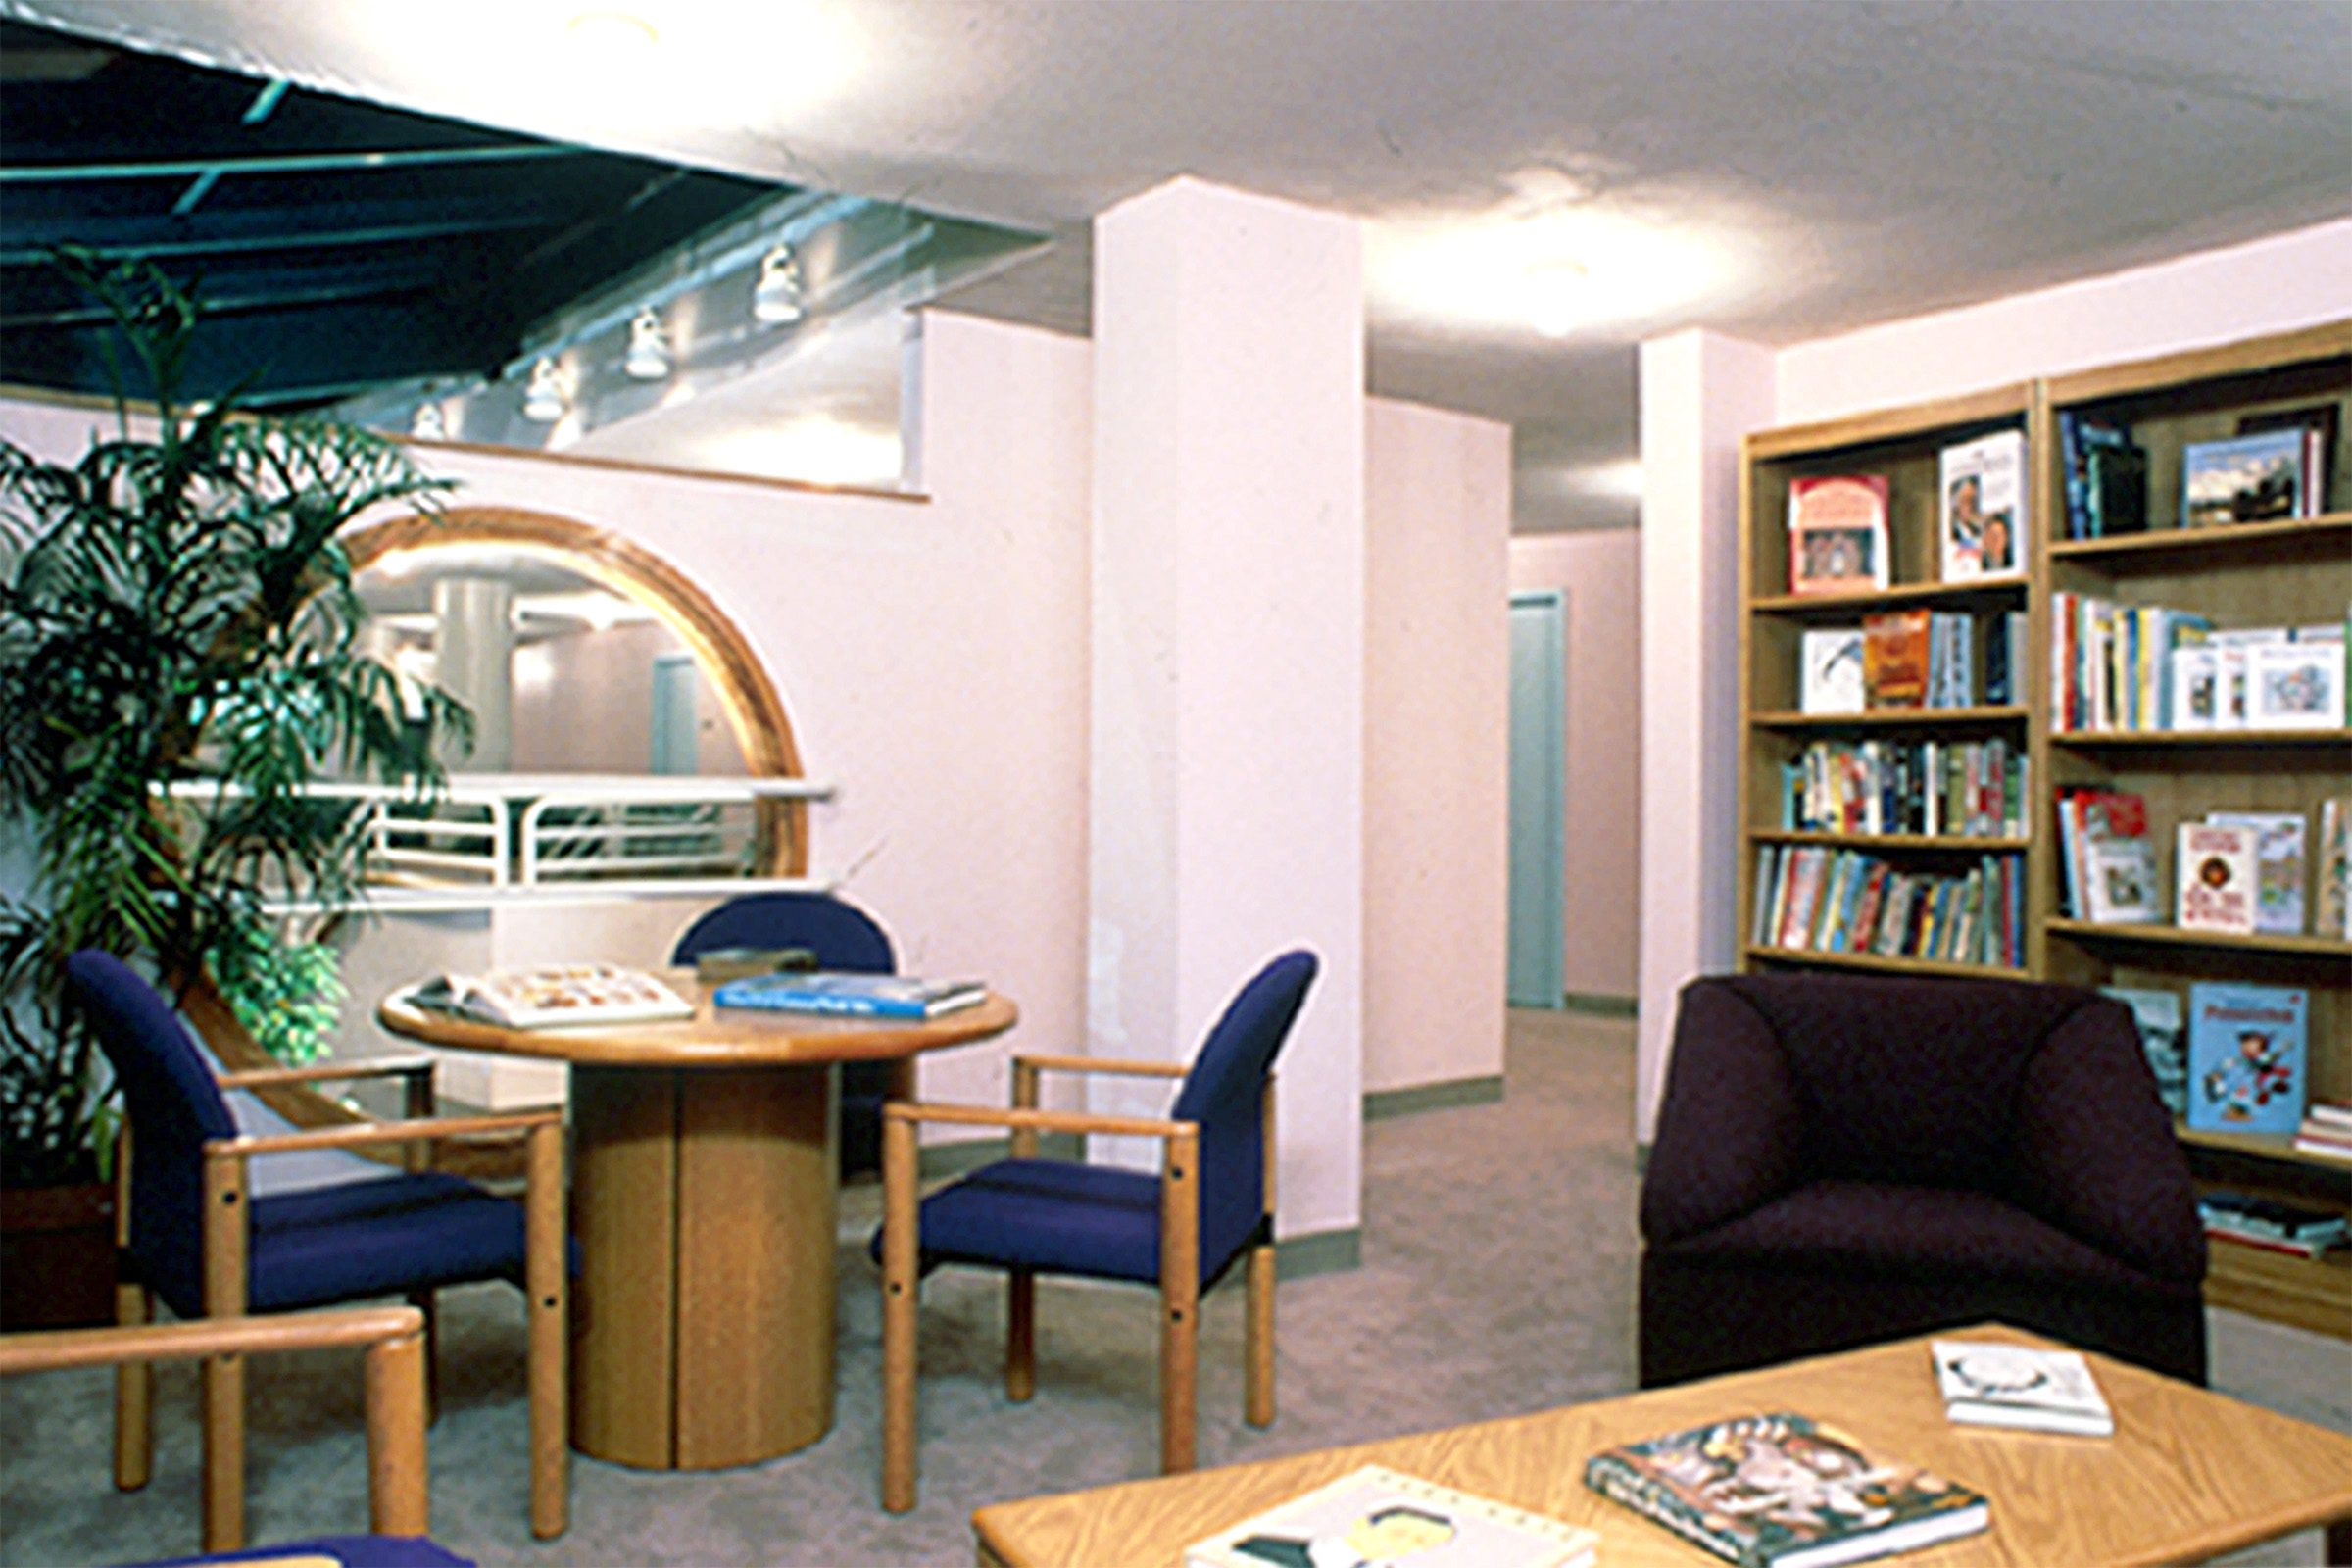 Interior View 6 - Reading Area.jpg